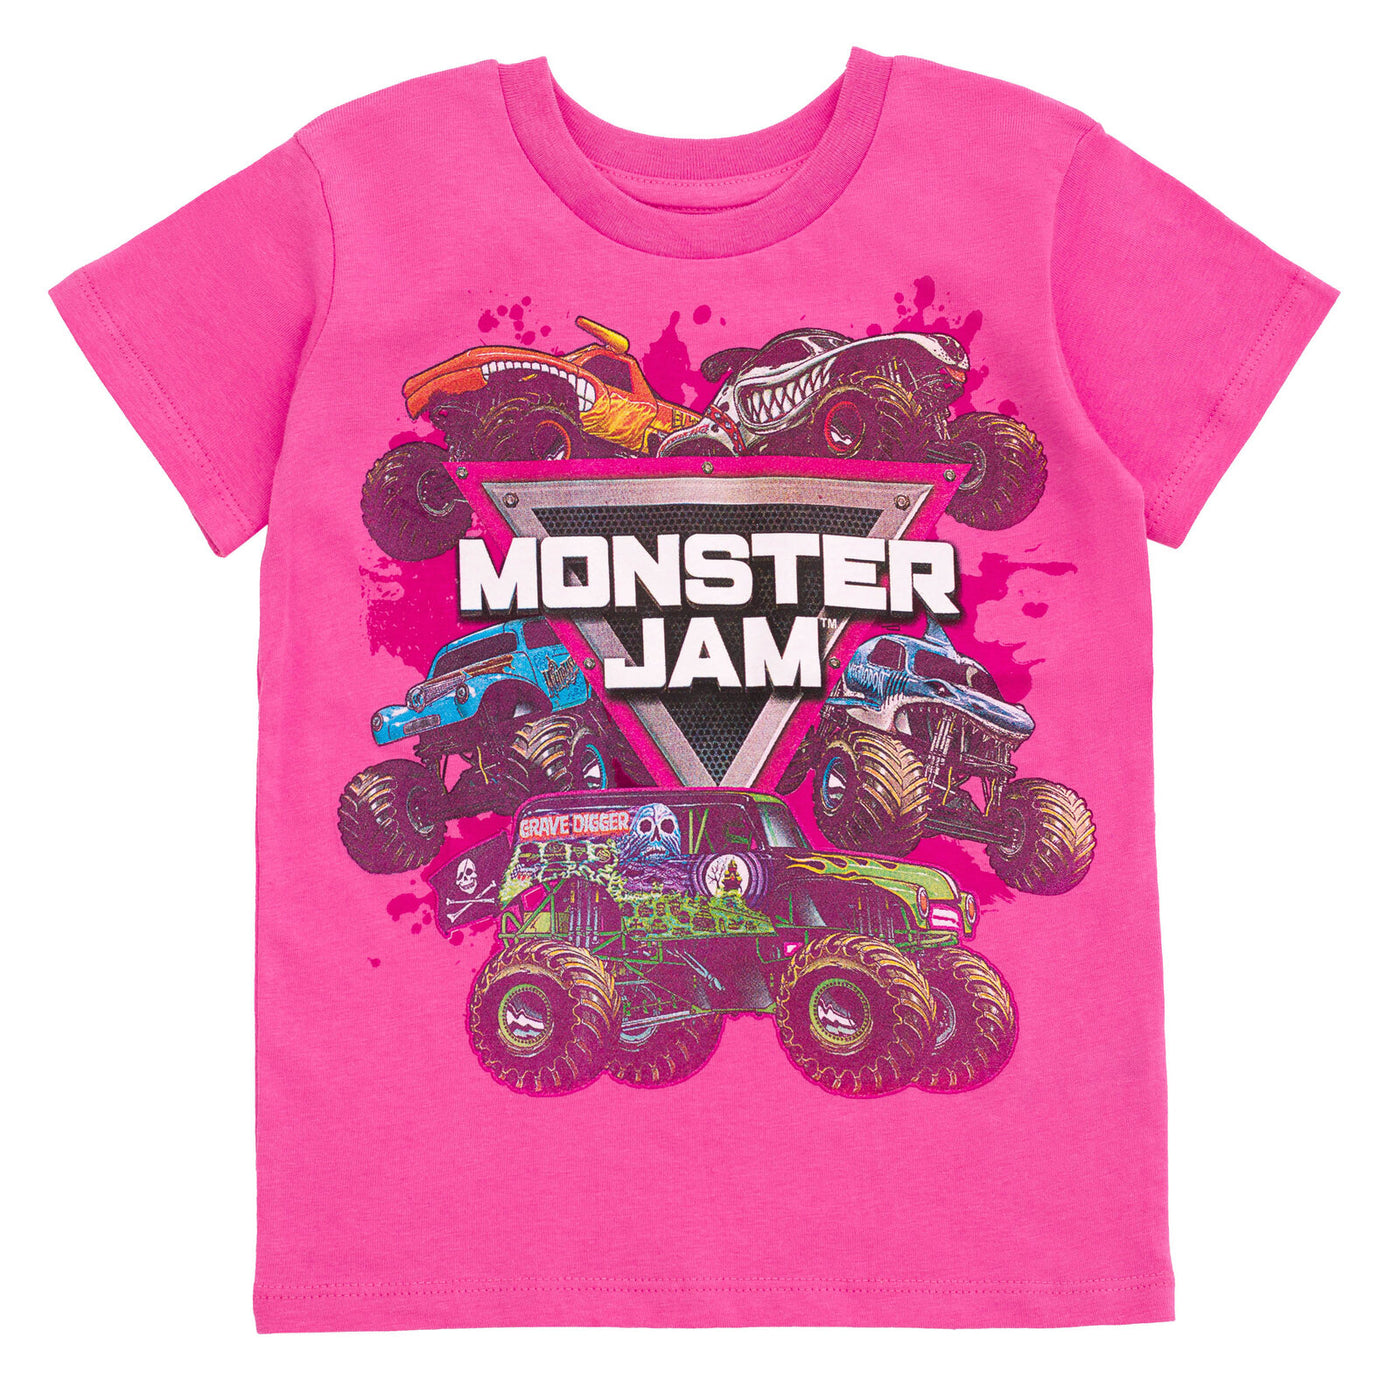 Monster Jam 2 Pack T-Shirts